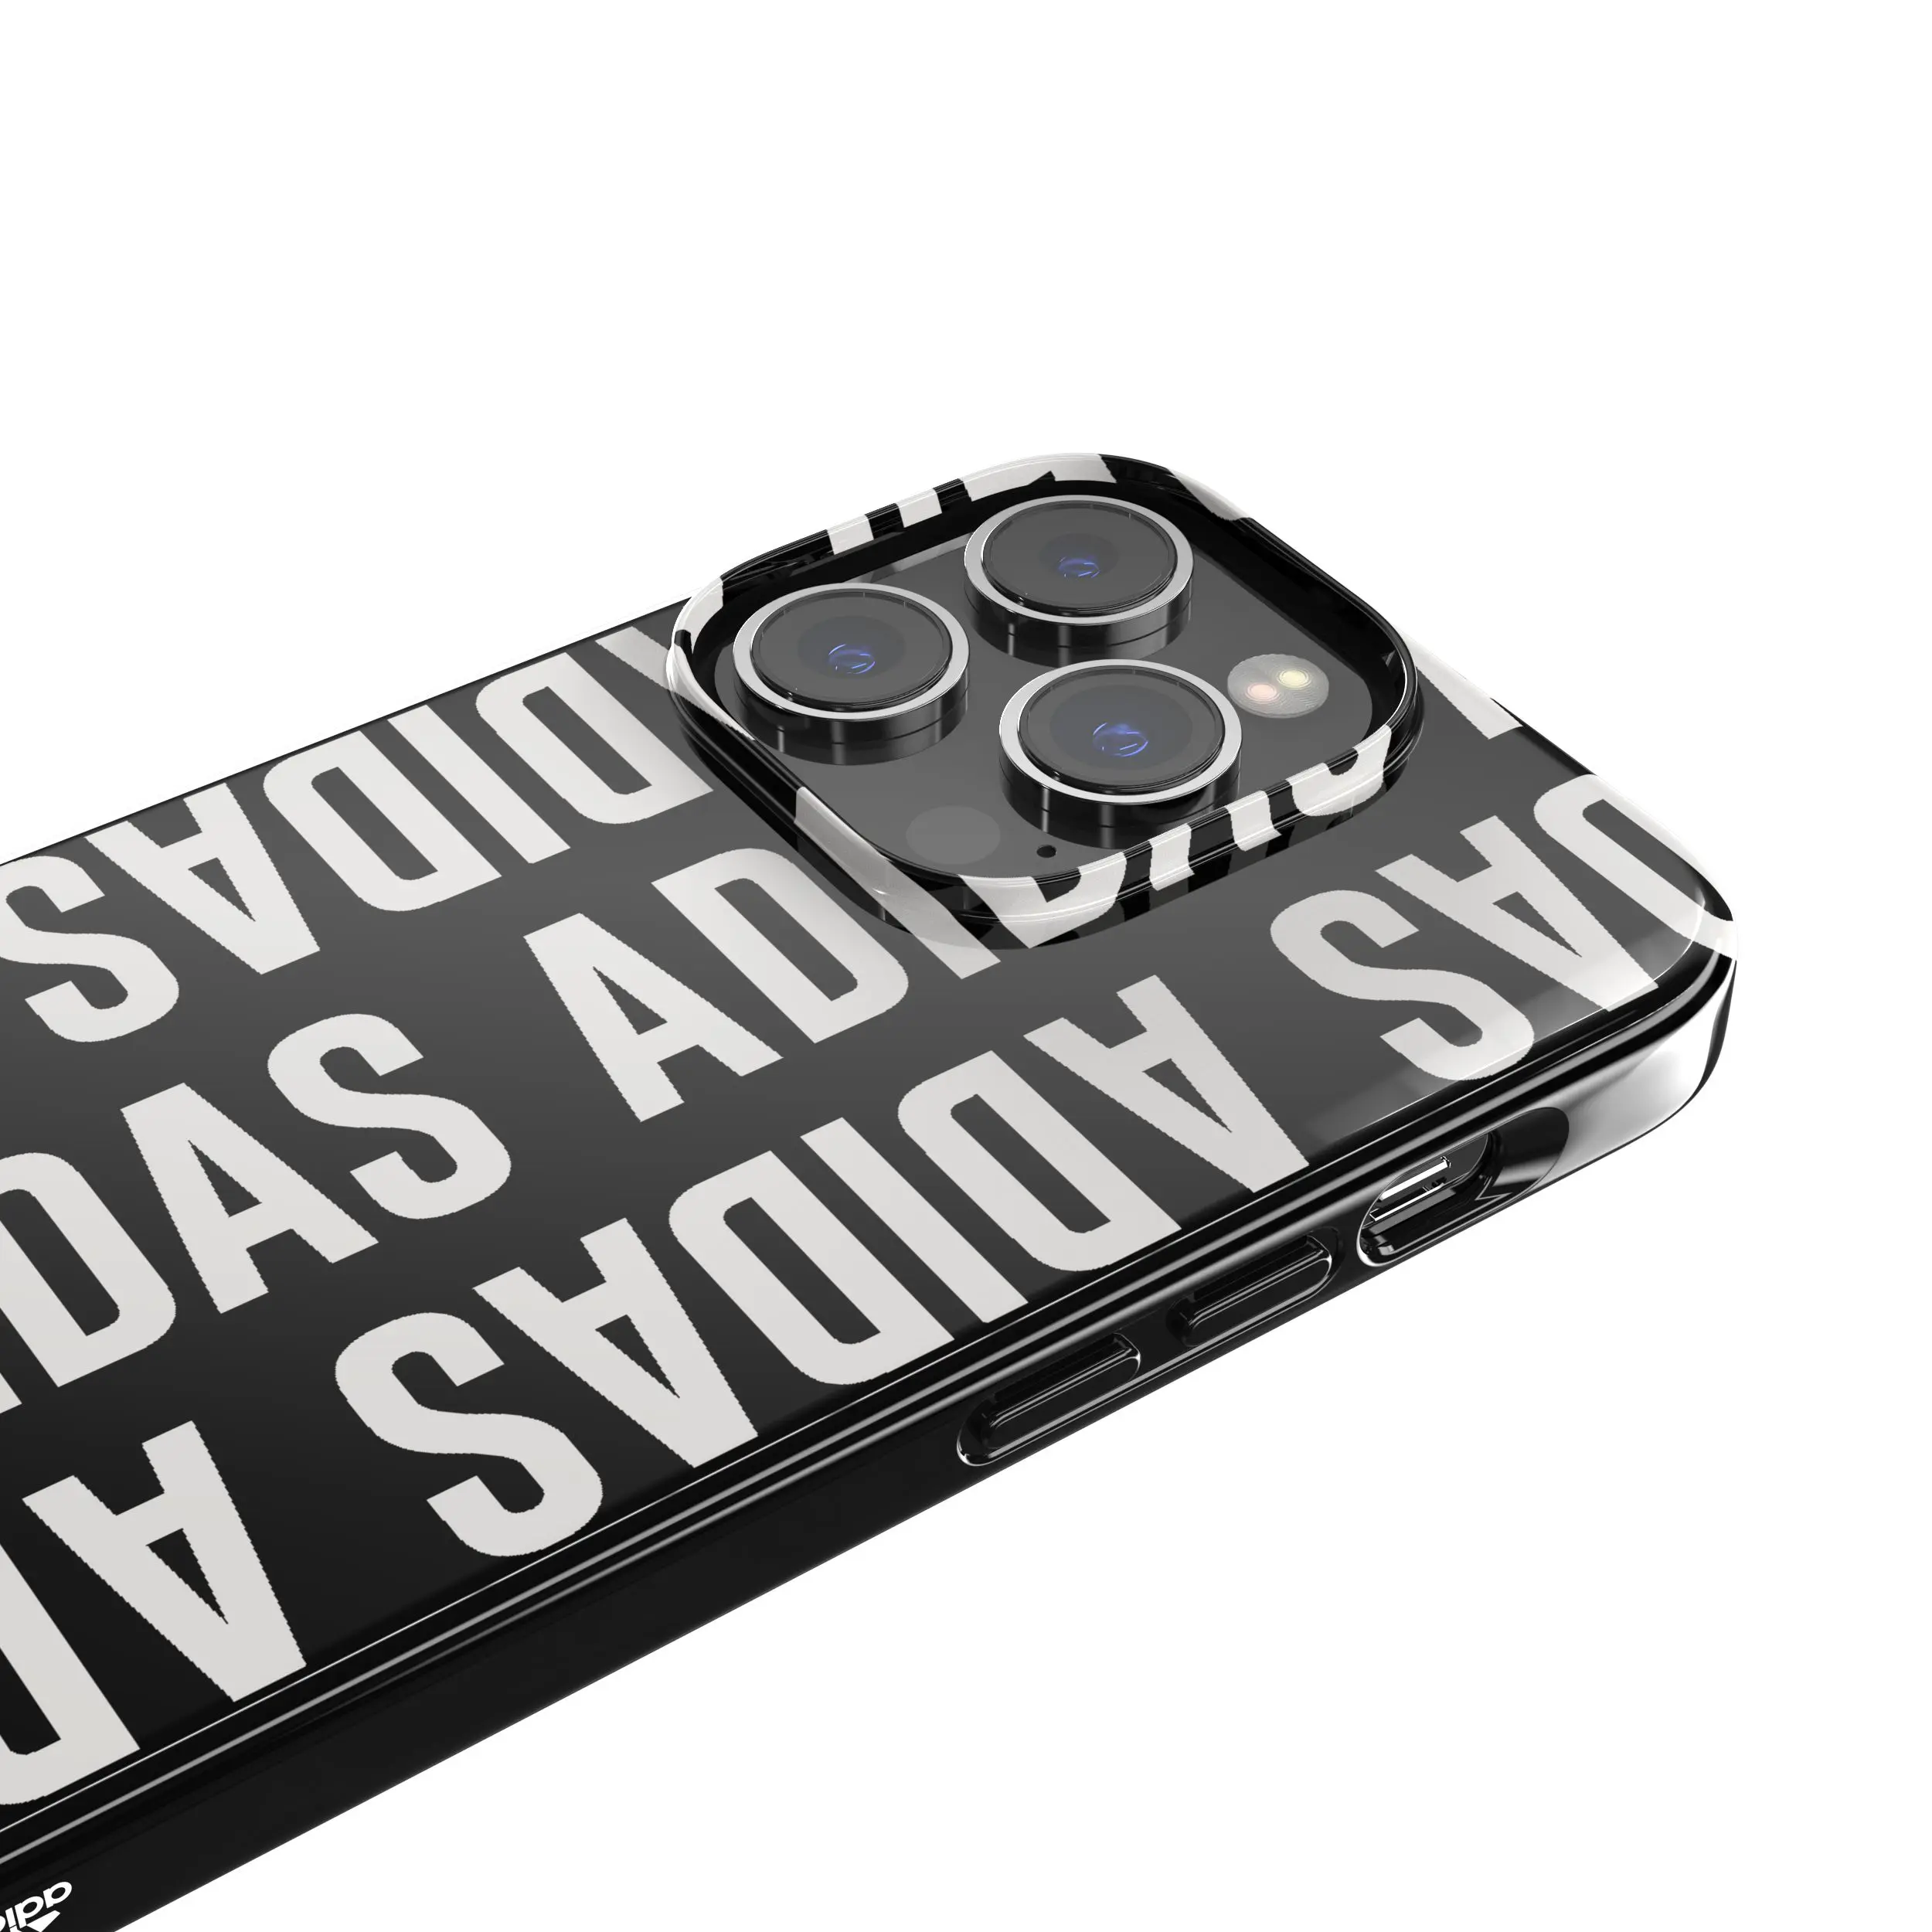 Adidas รุ่น Snap Case Logo - เคส iPhone 14 Pro - สี Black/White